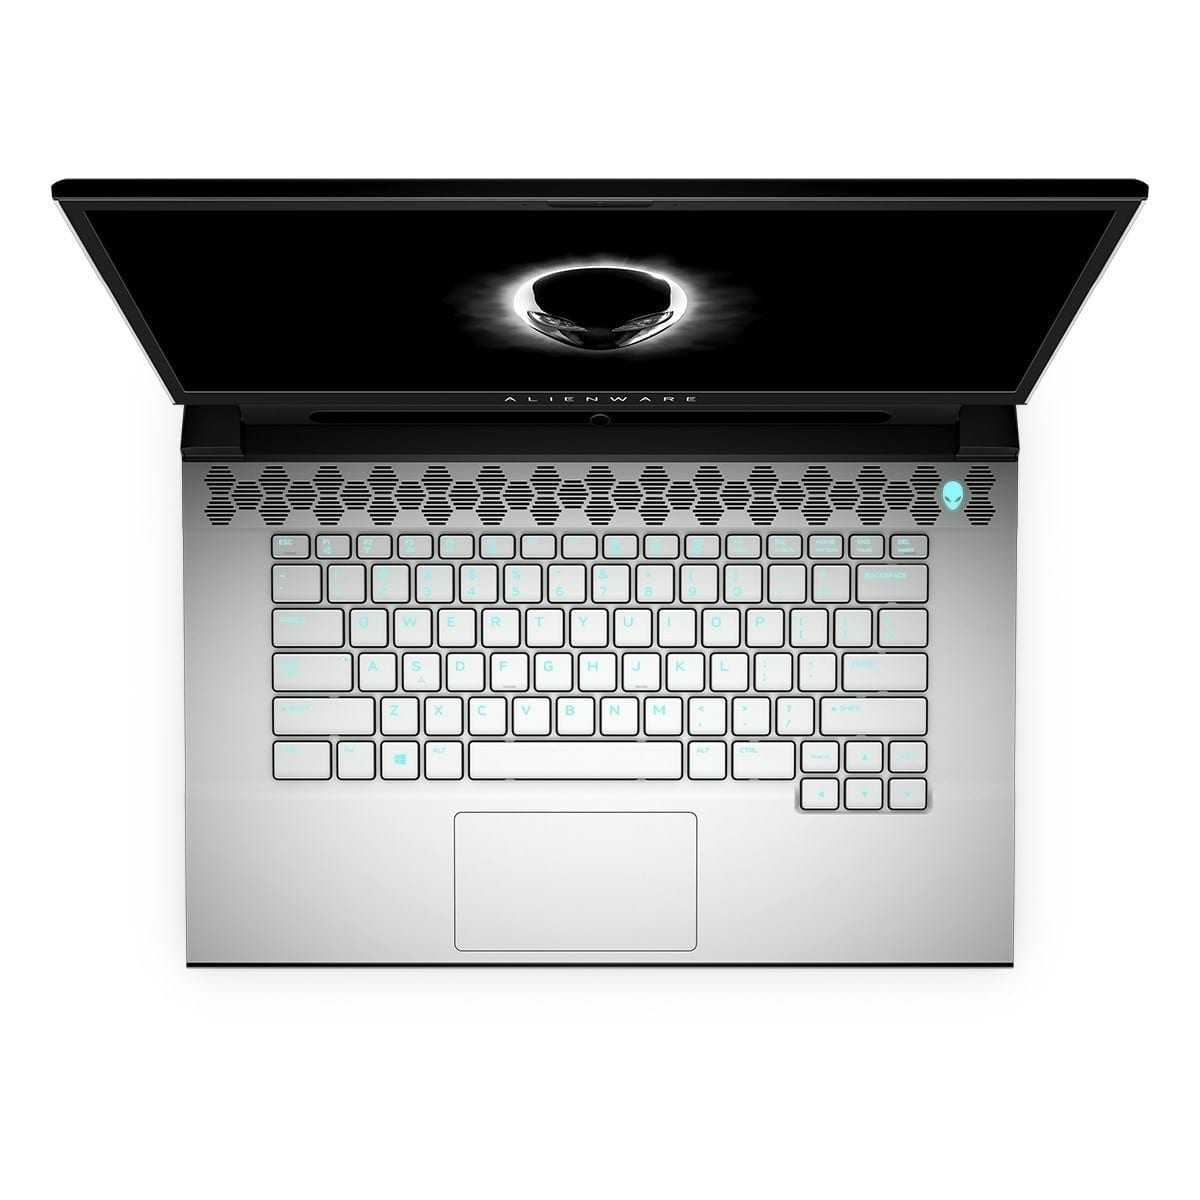 Computex 2019 – Nέα Dell New Alienware Laptop